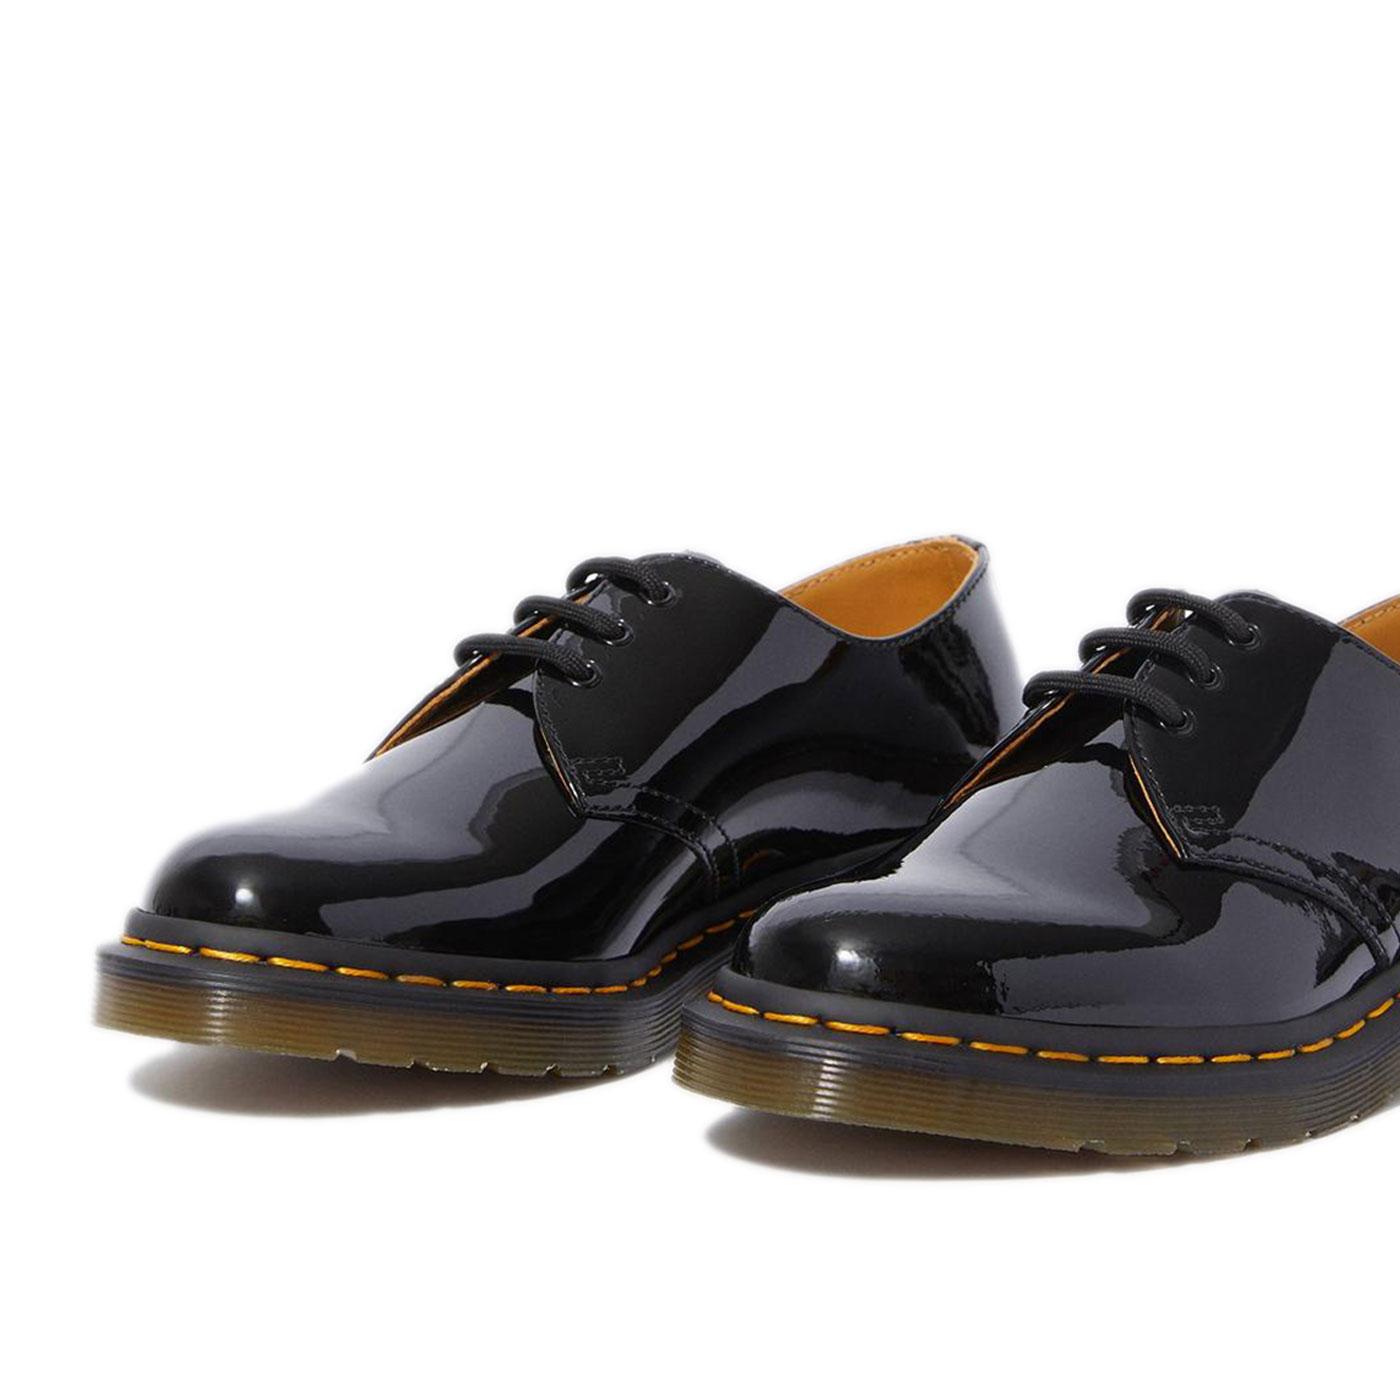 DR MARTENS Women's 1461 Patent Lampent Leather Shoes